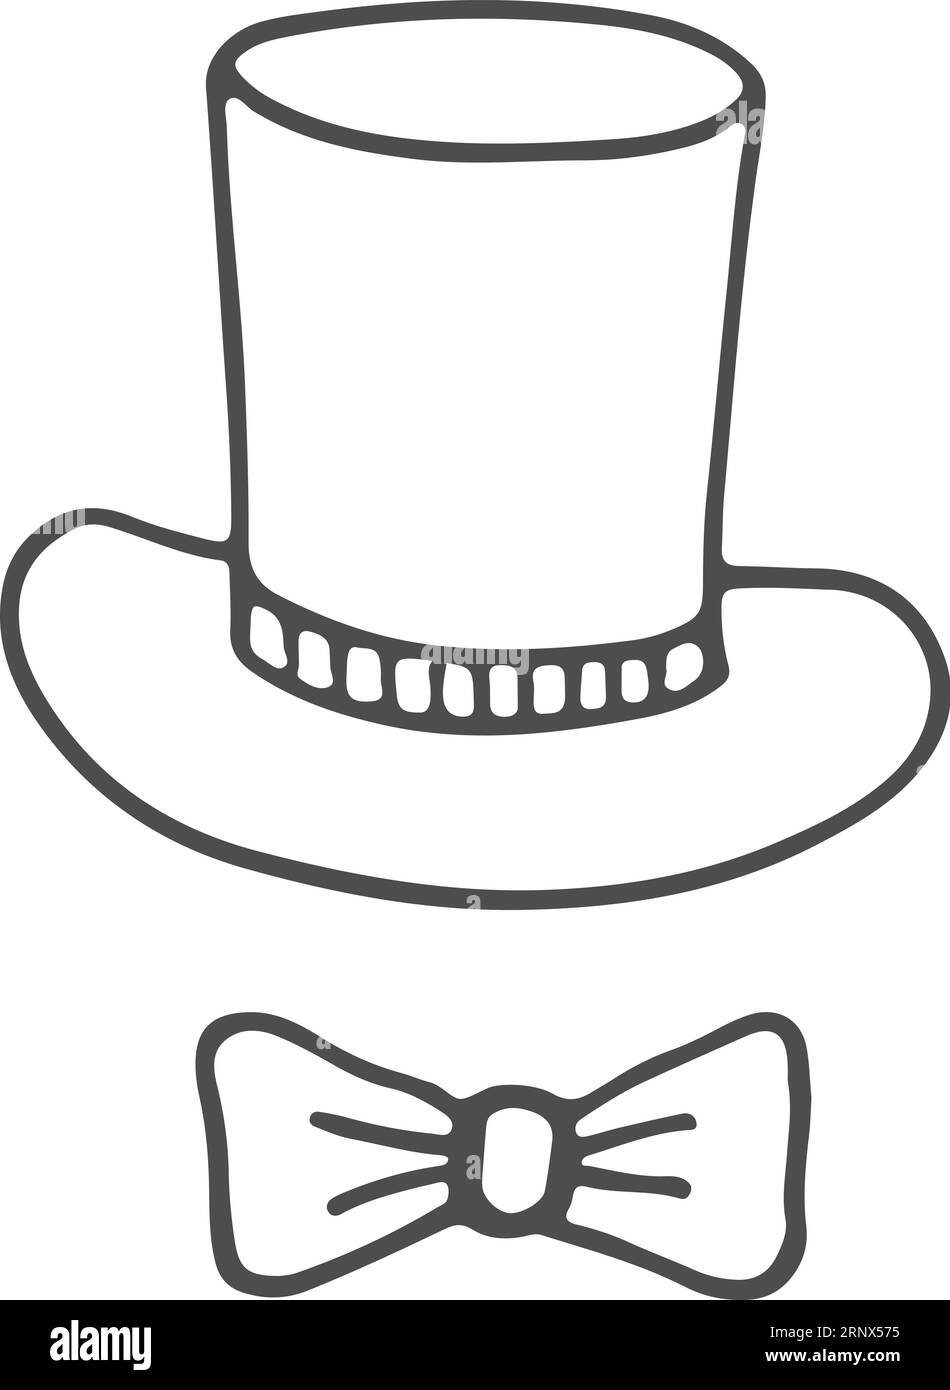 Top hat and bow tie doodle. Gentleman accessories icon Stock Vector